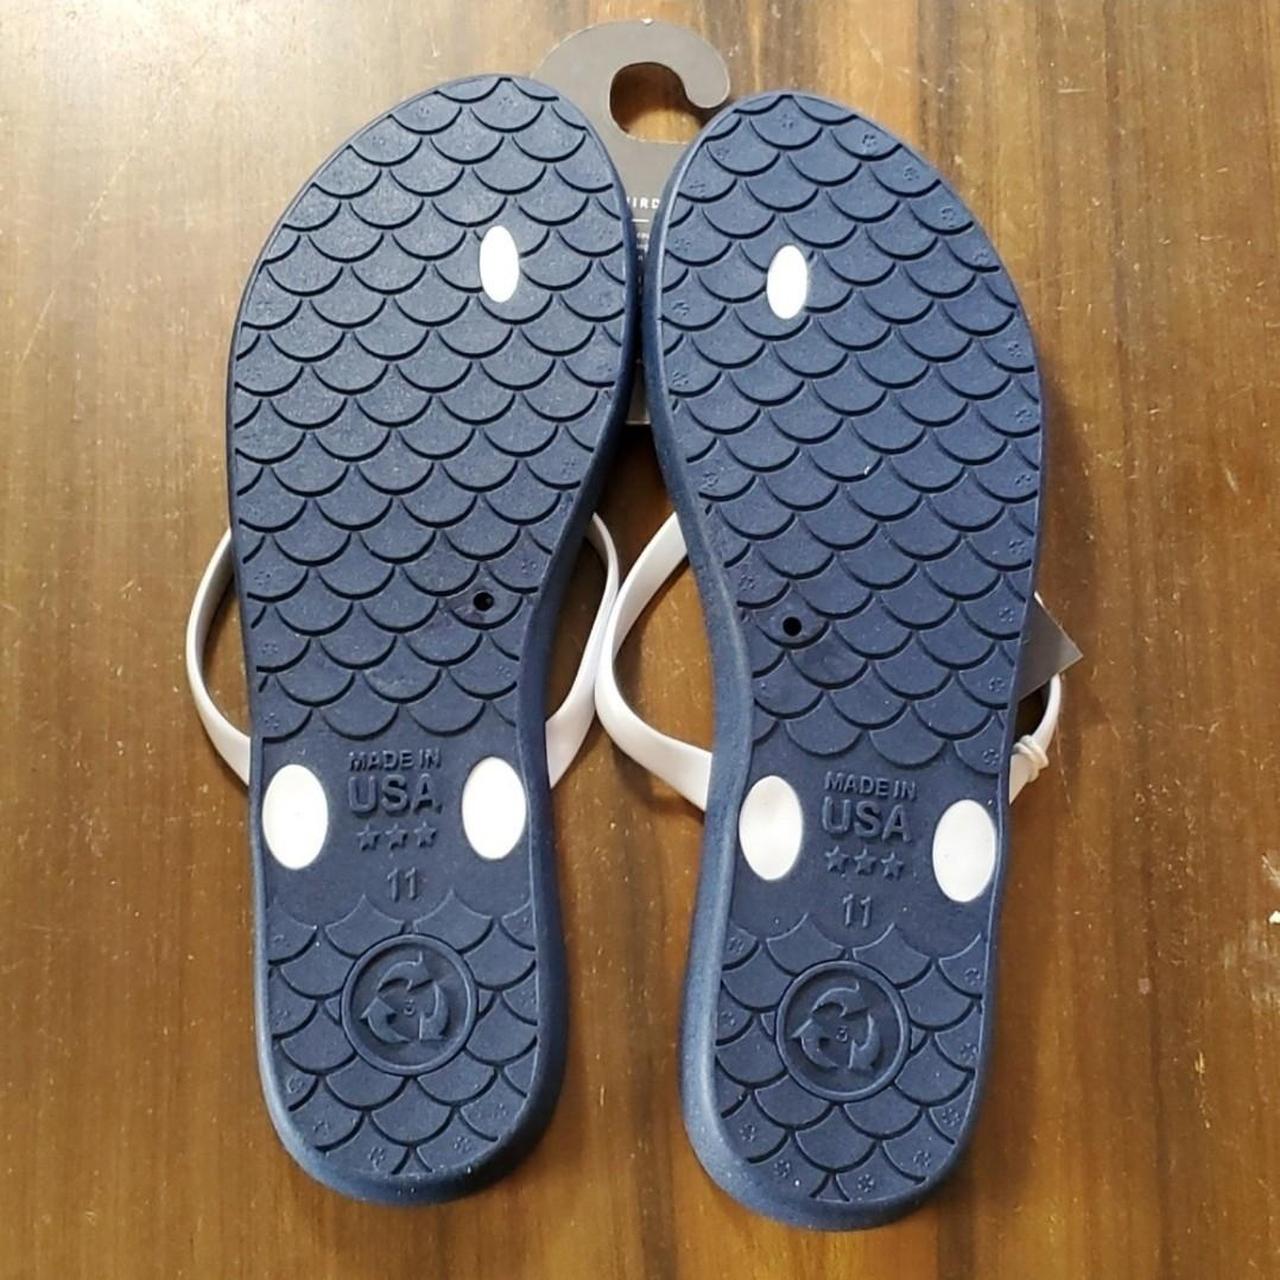 Third Oak Flip Flop Sandals Made in USA Size 11